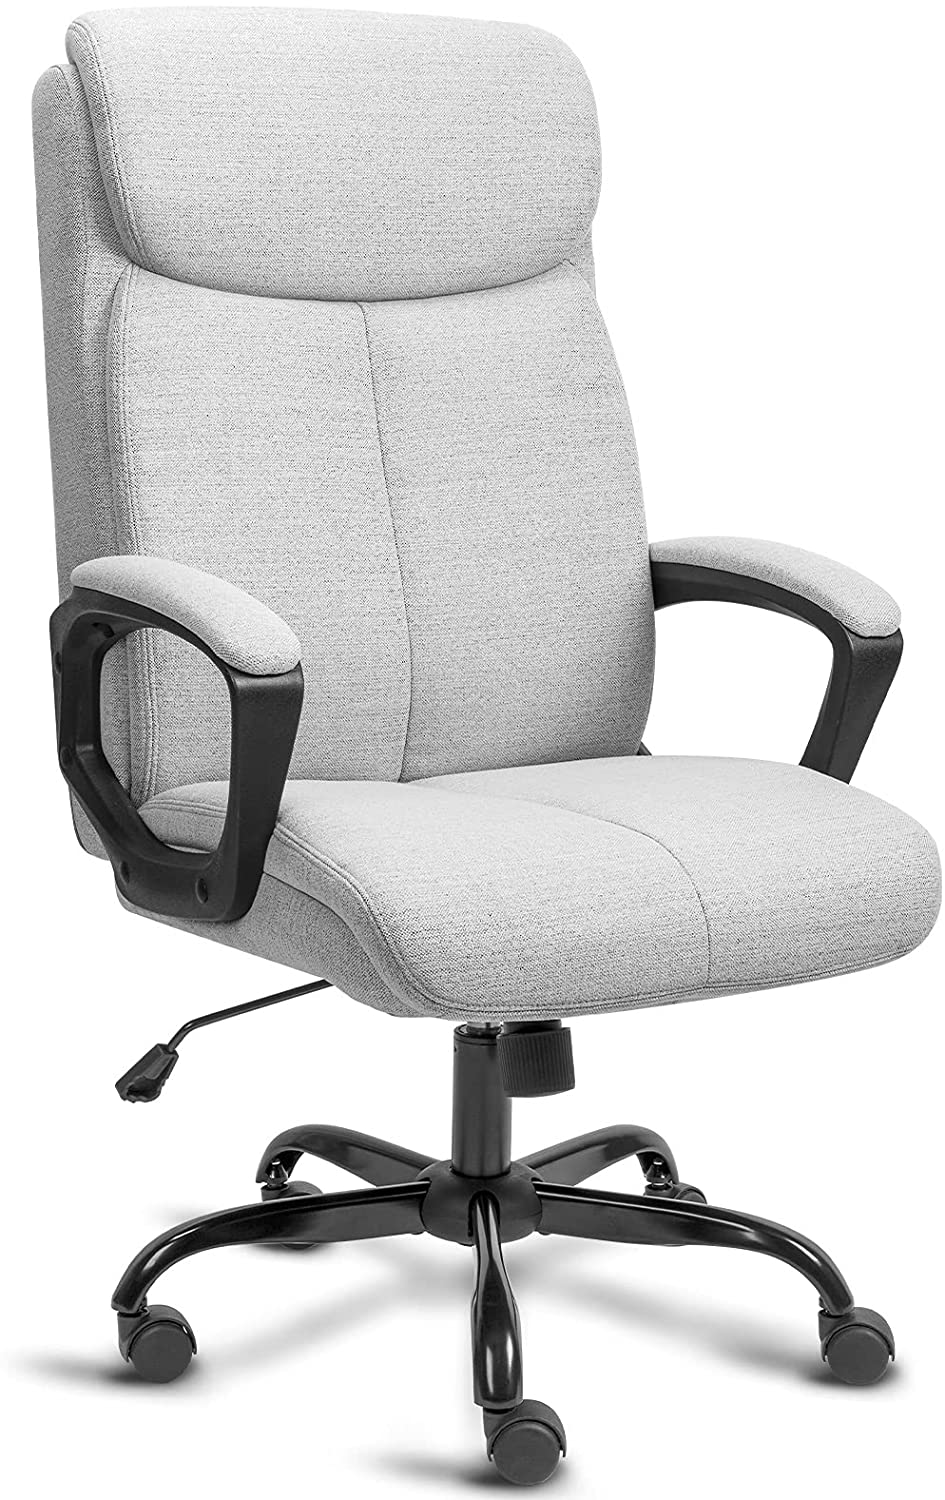 BASETBL Executive Office Chair, Ergonomic Computer Desk Chair